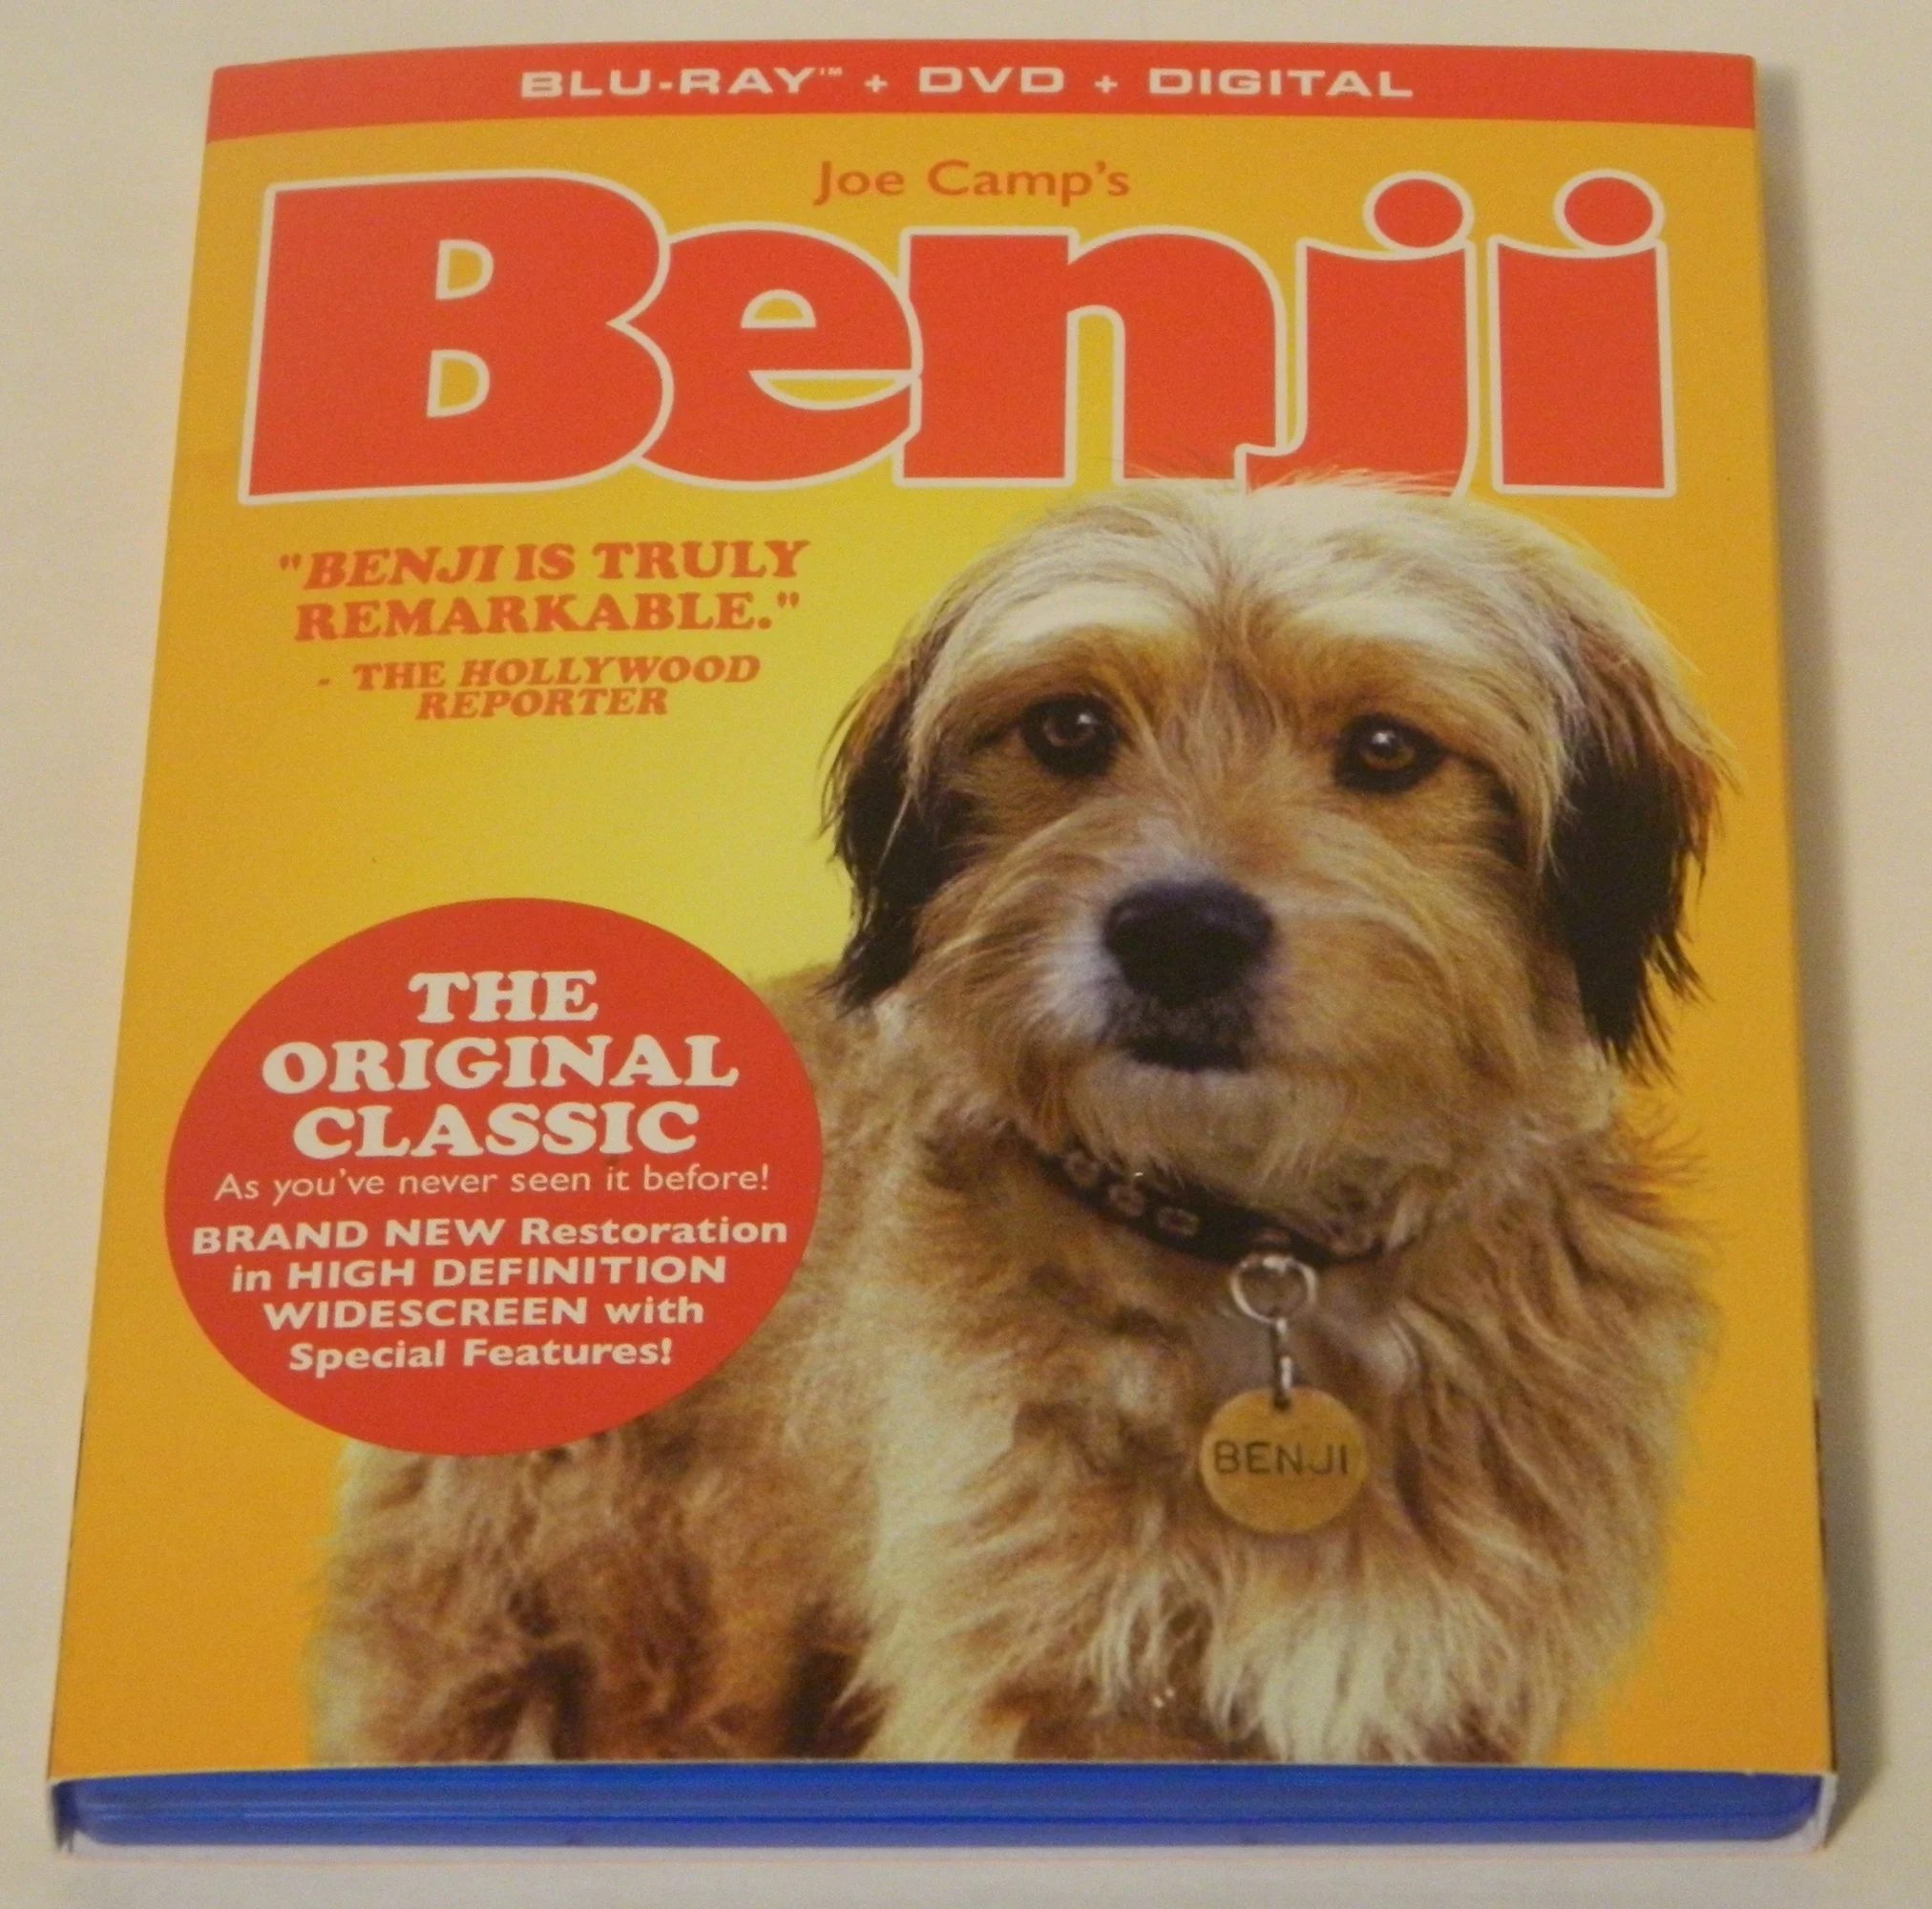 Benji Blu-ray